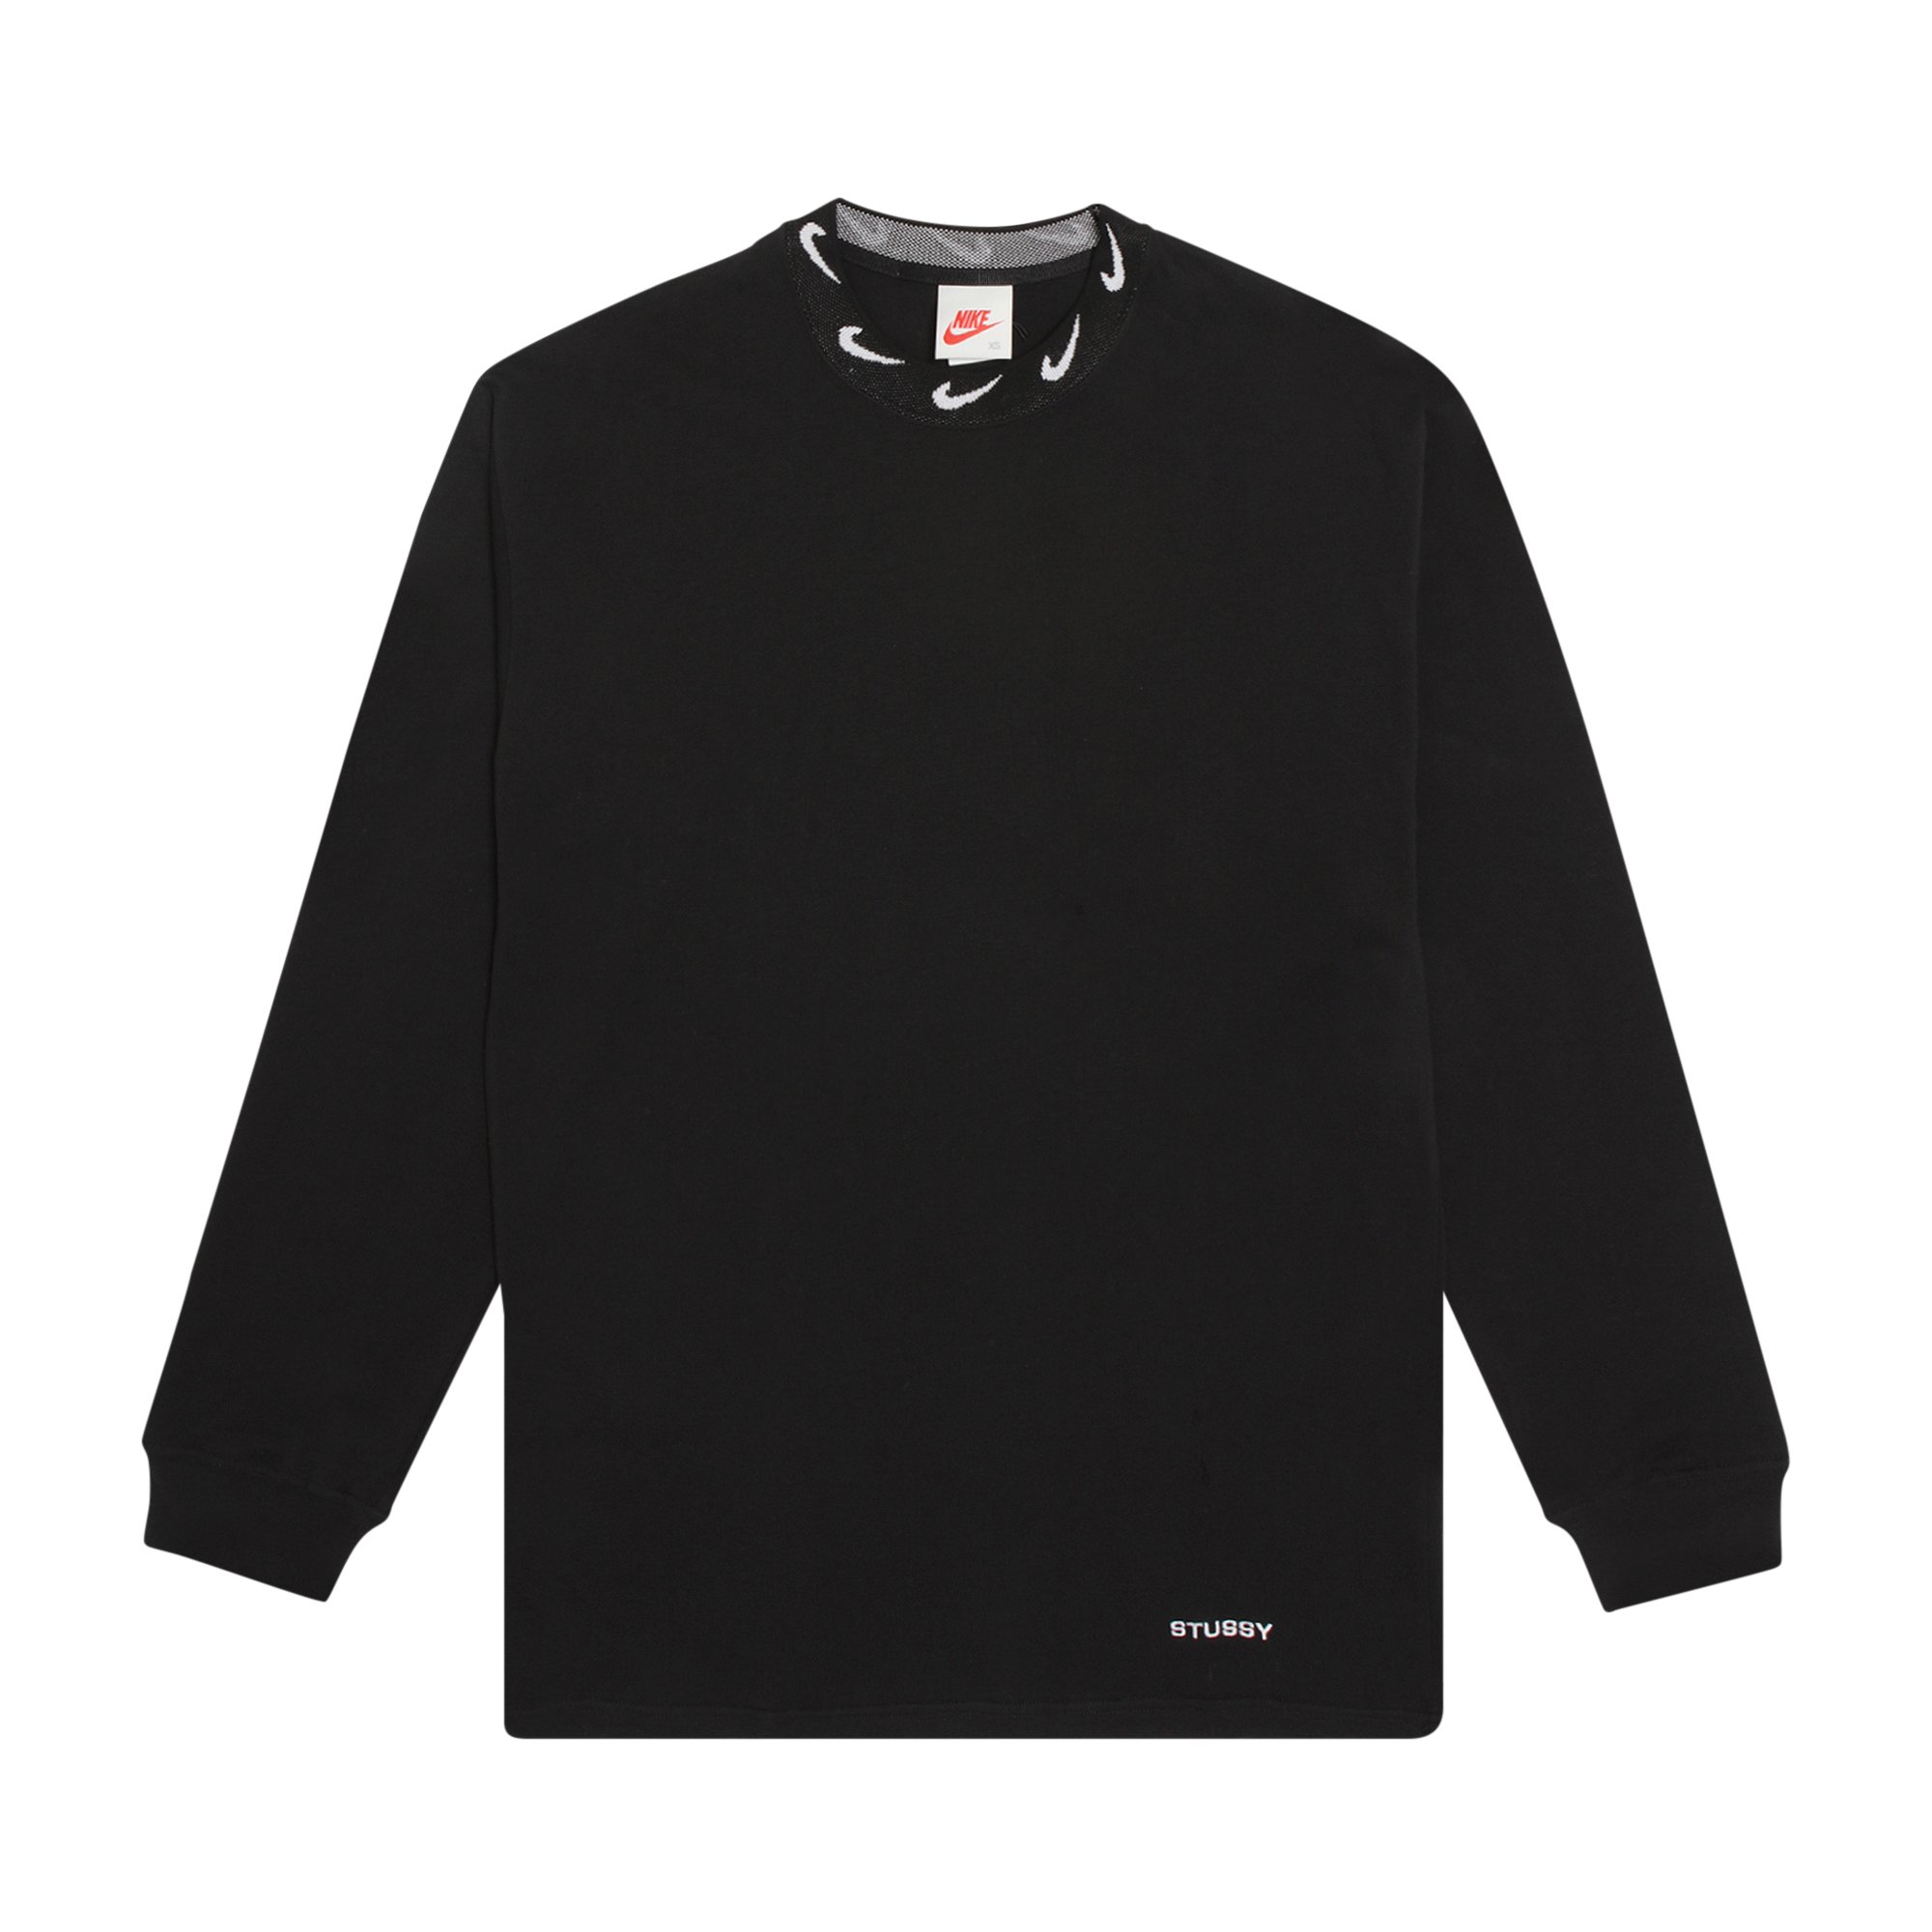 Buy Nike x Stussy NRG BR Long-Sleeve Knit Top 'Black' - CT4314 010 